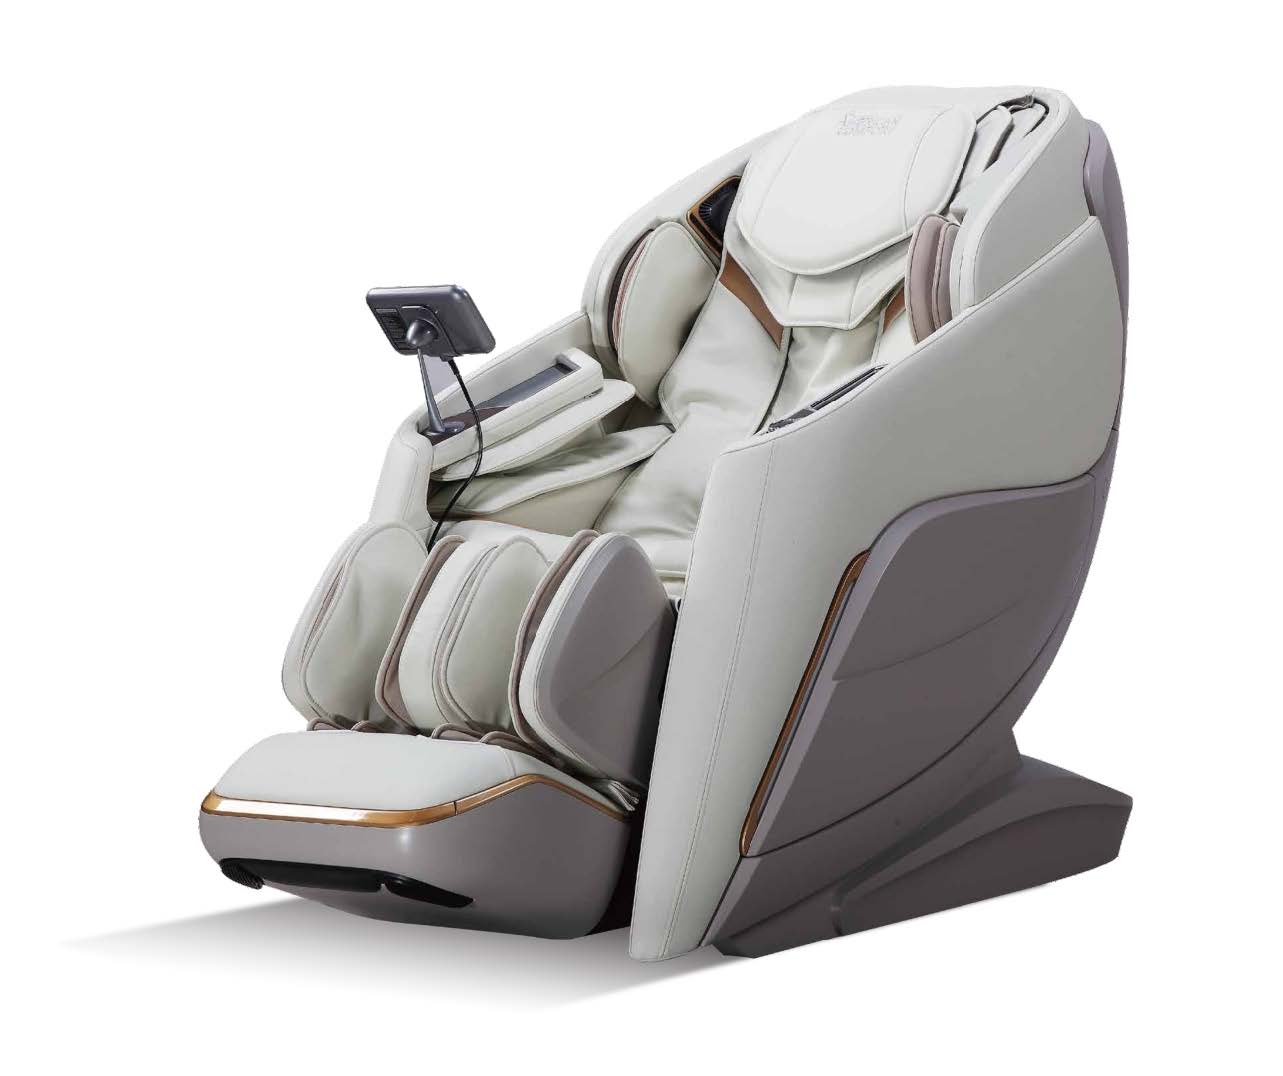 5D Massage Chair in varanasi, 5D Massage Chair Manufacturers